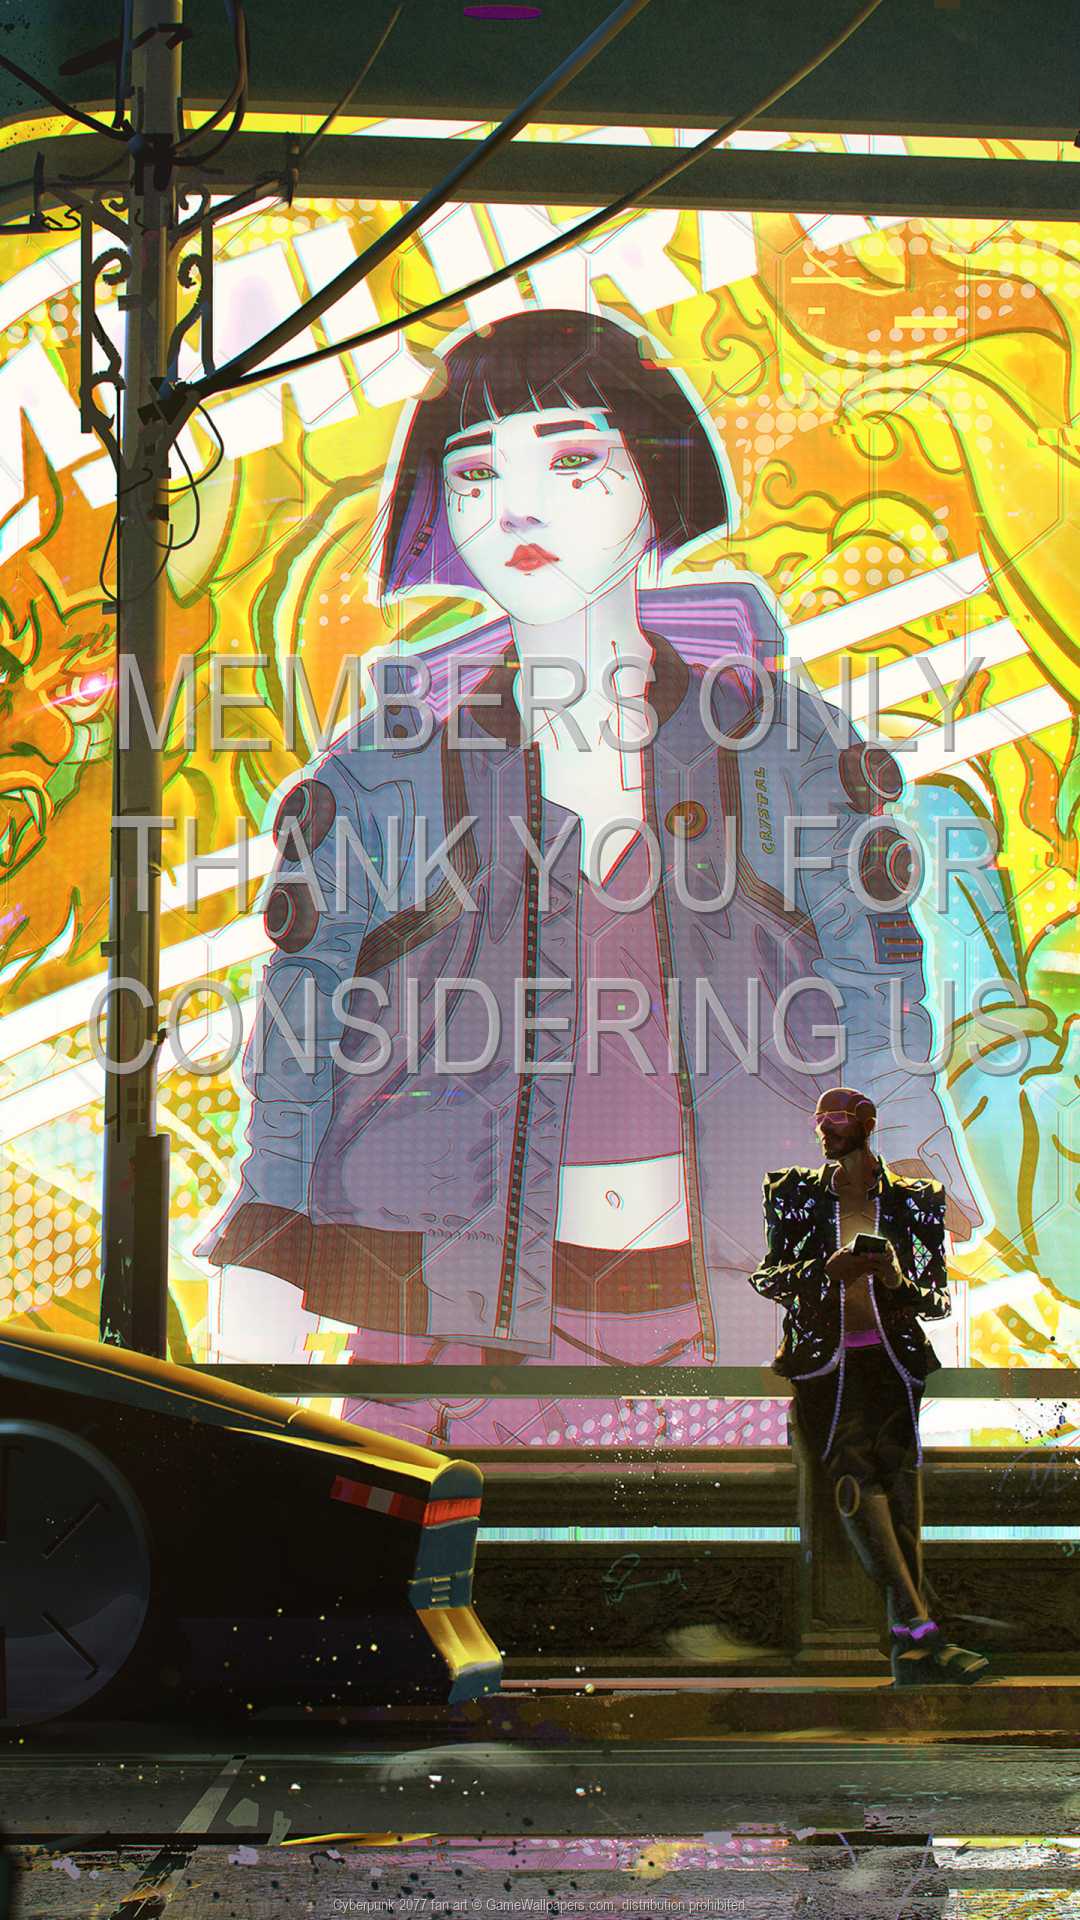 Cyberpunk 2077 fan art 1080p Vertical Mobile wallpaper or background 05